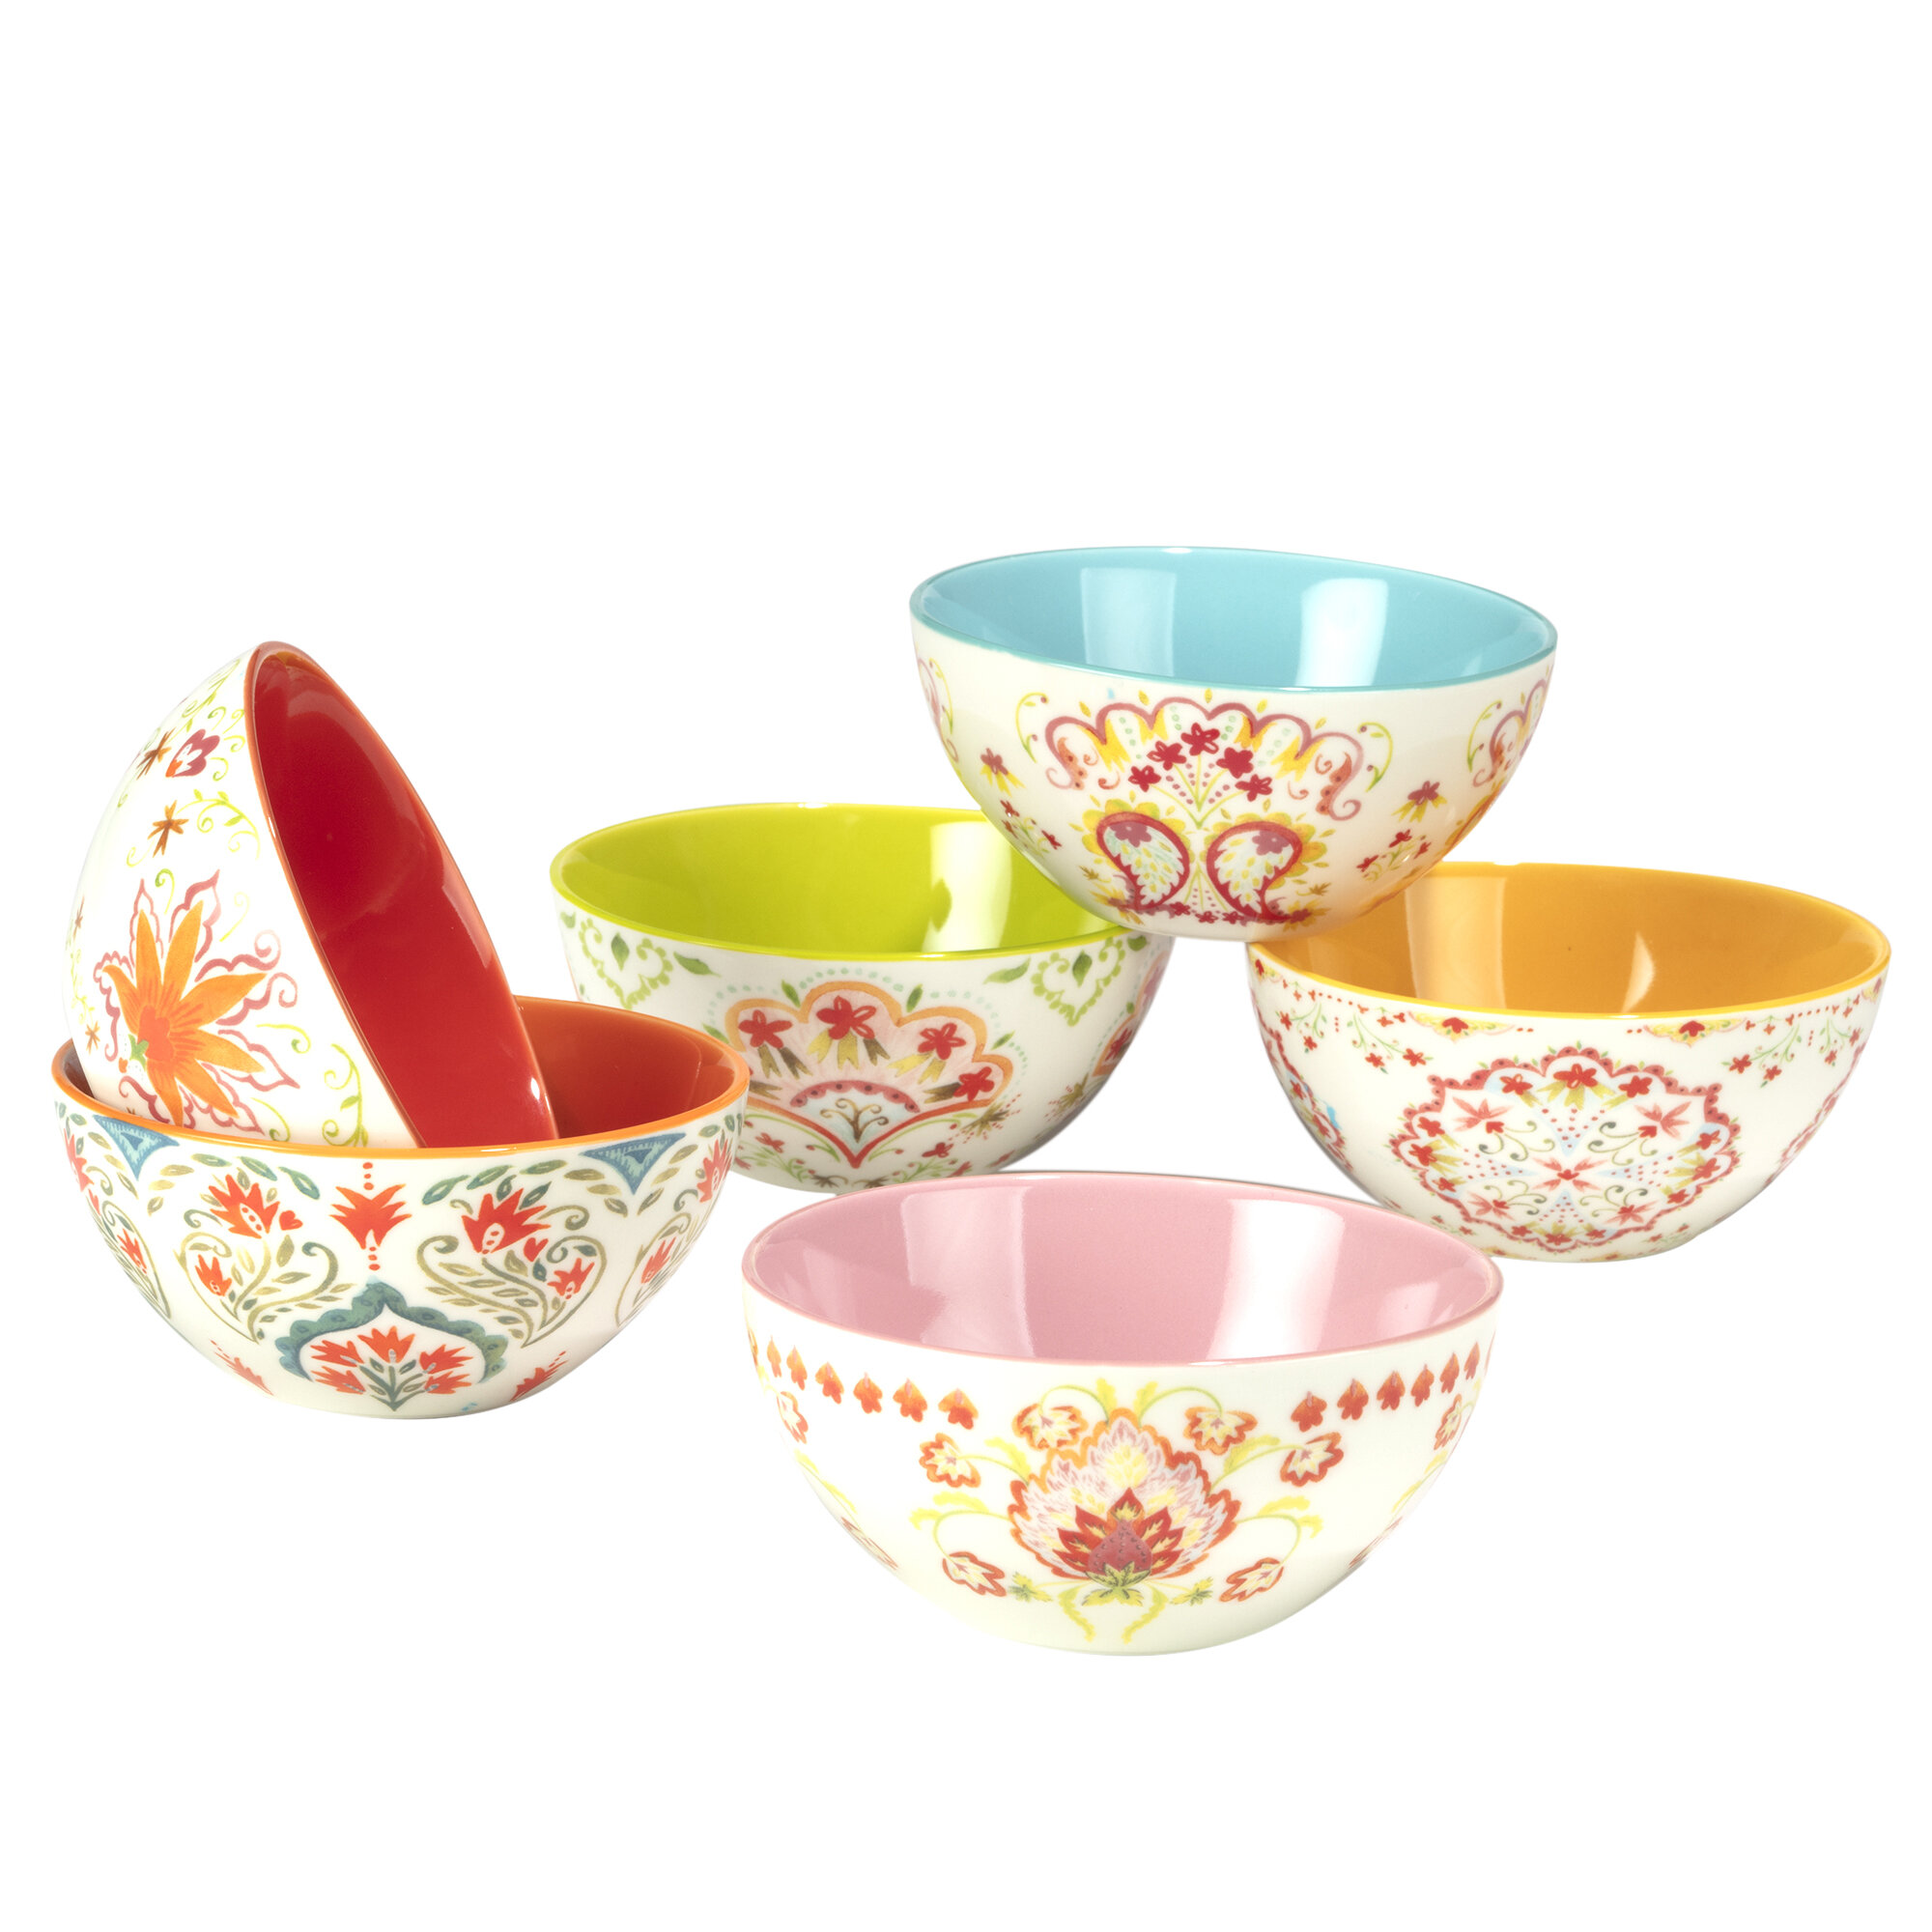 vancasso TULIP Dinnerware Set Porcelain Tableware Plate Bowl Mug Multicolor